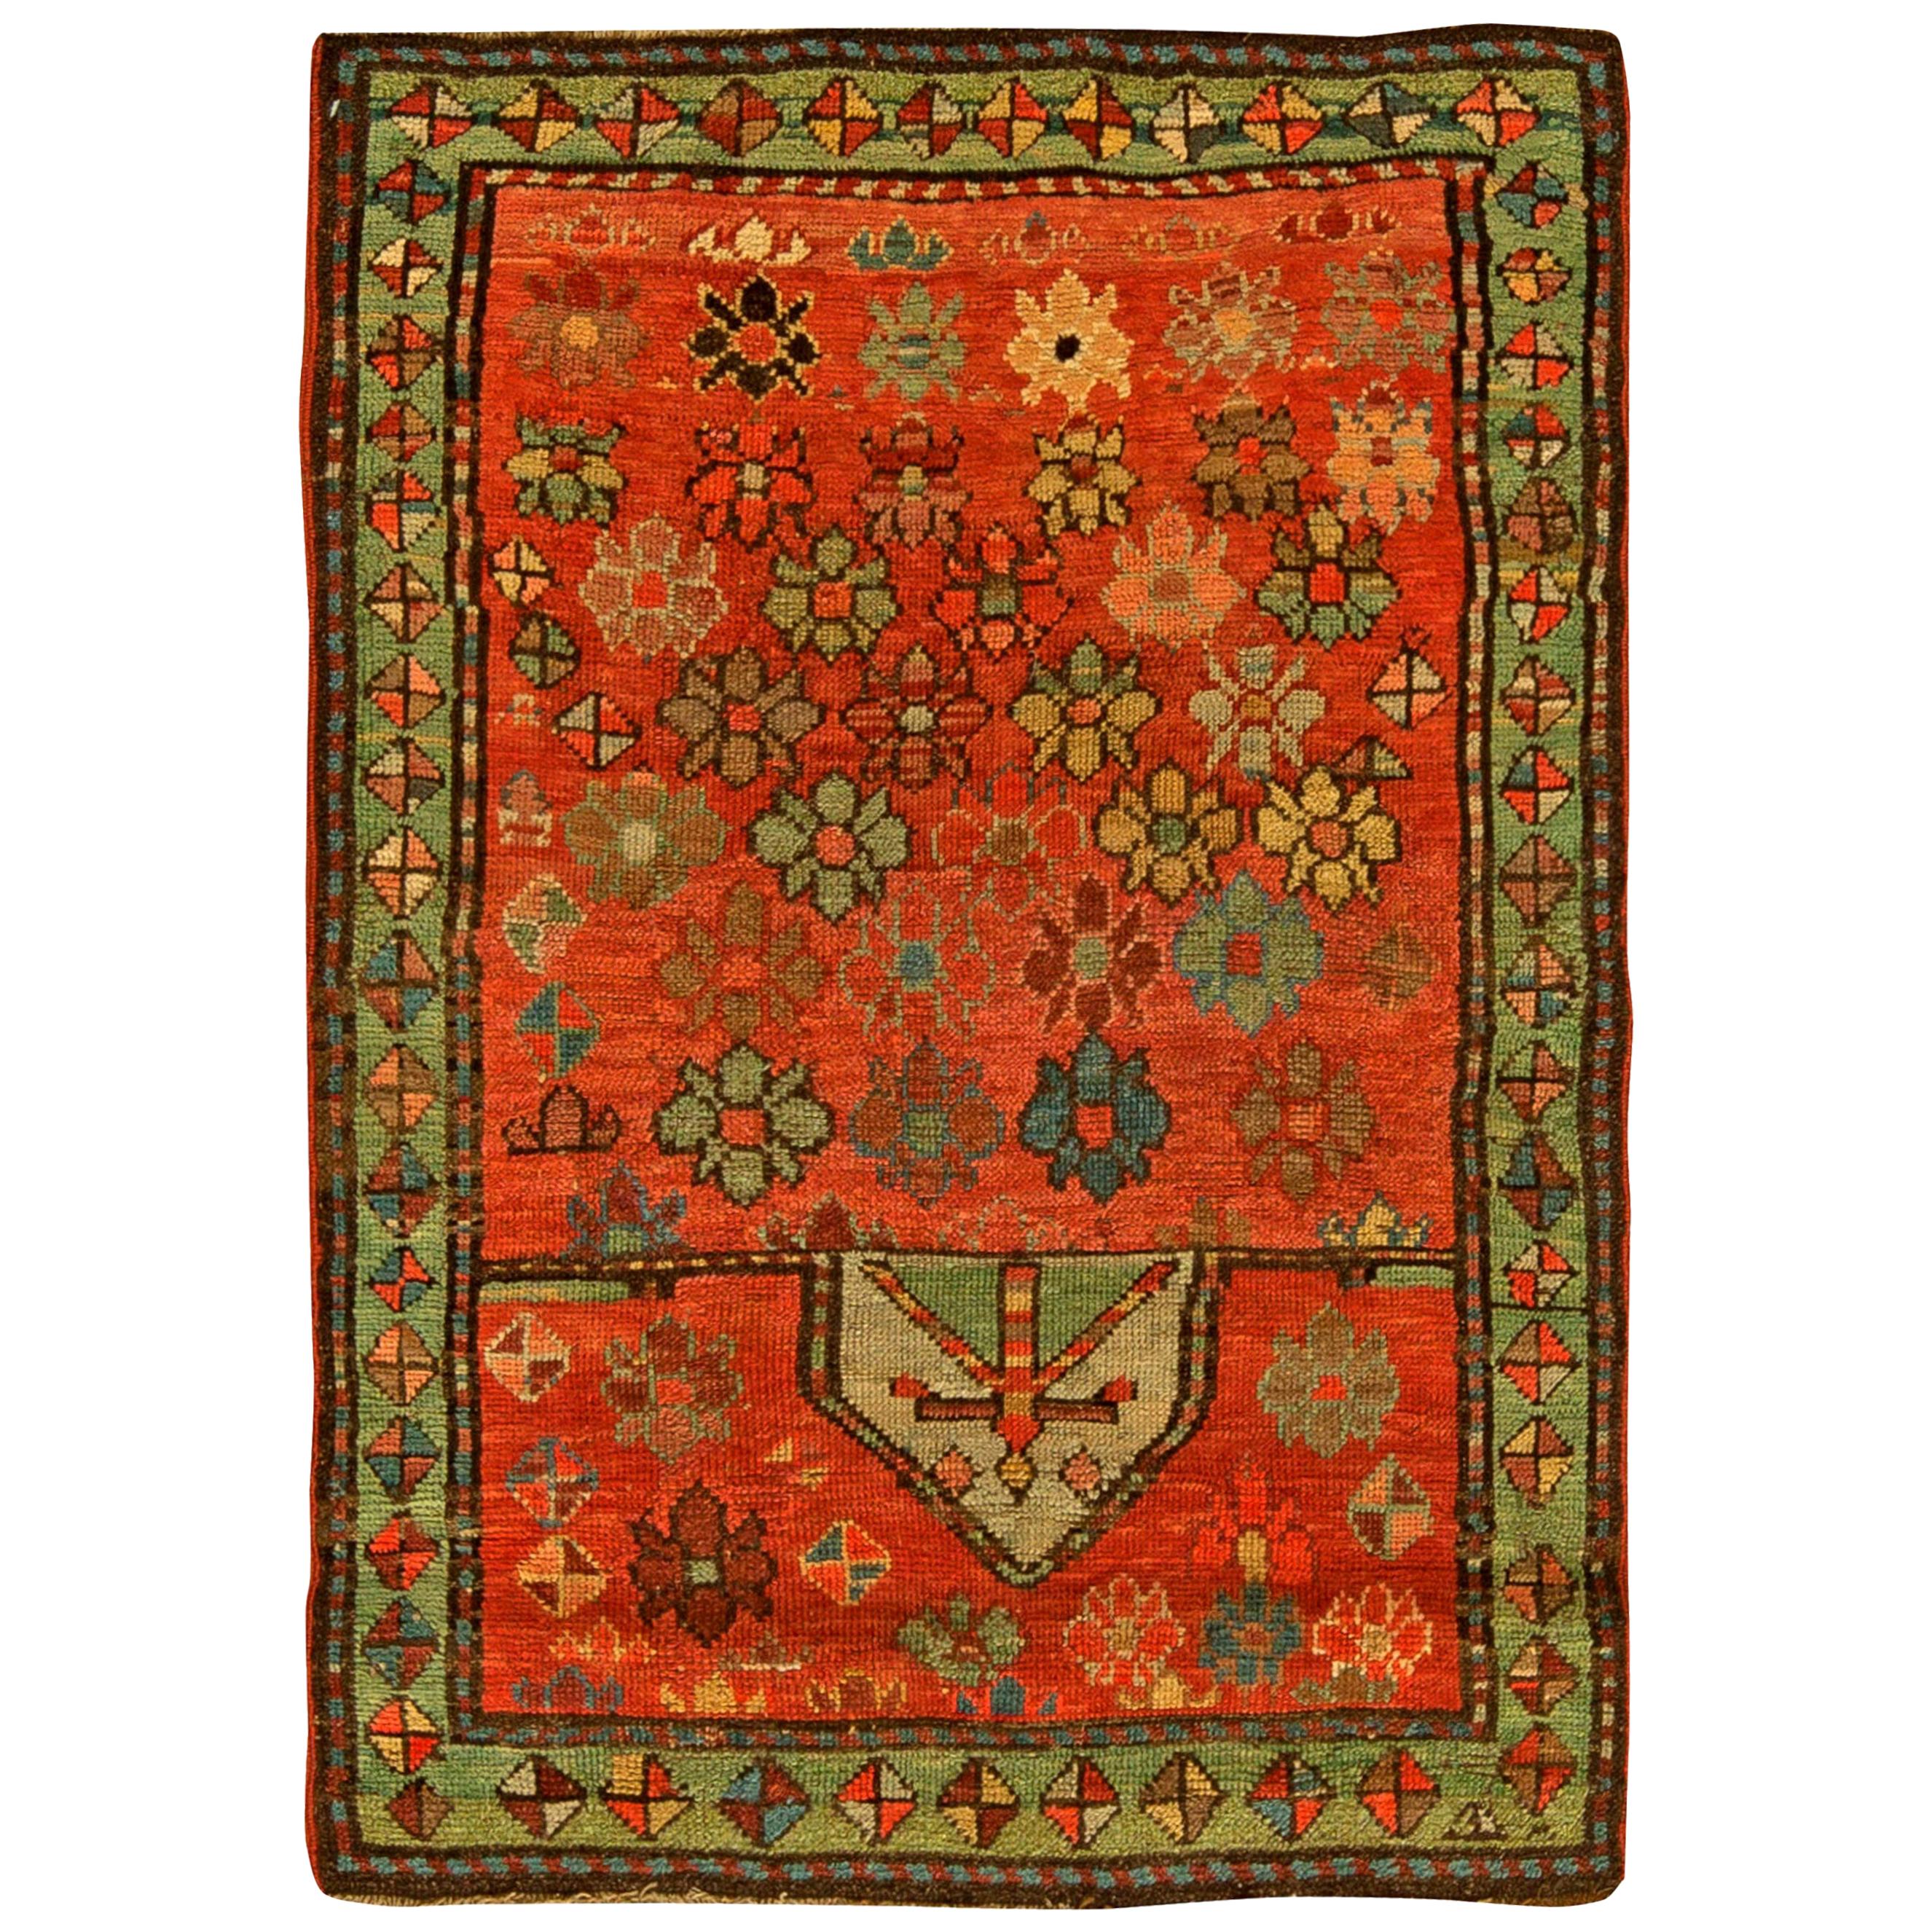 Early 20th Century Caucasian Orange Green Handmade Wool Rug by Doris Leslie Blau